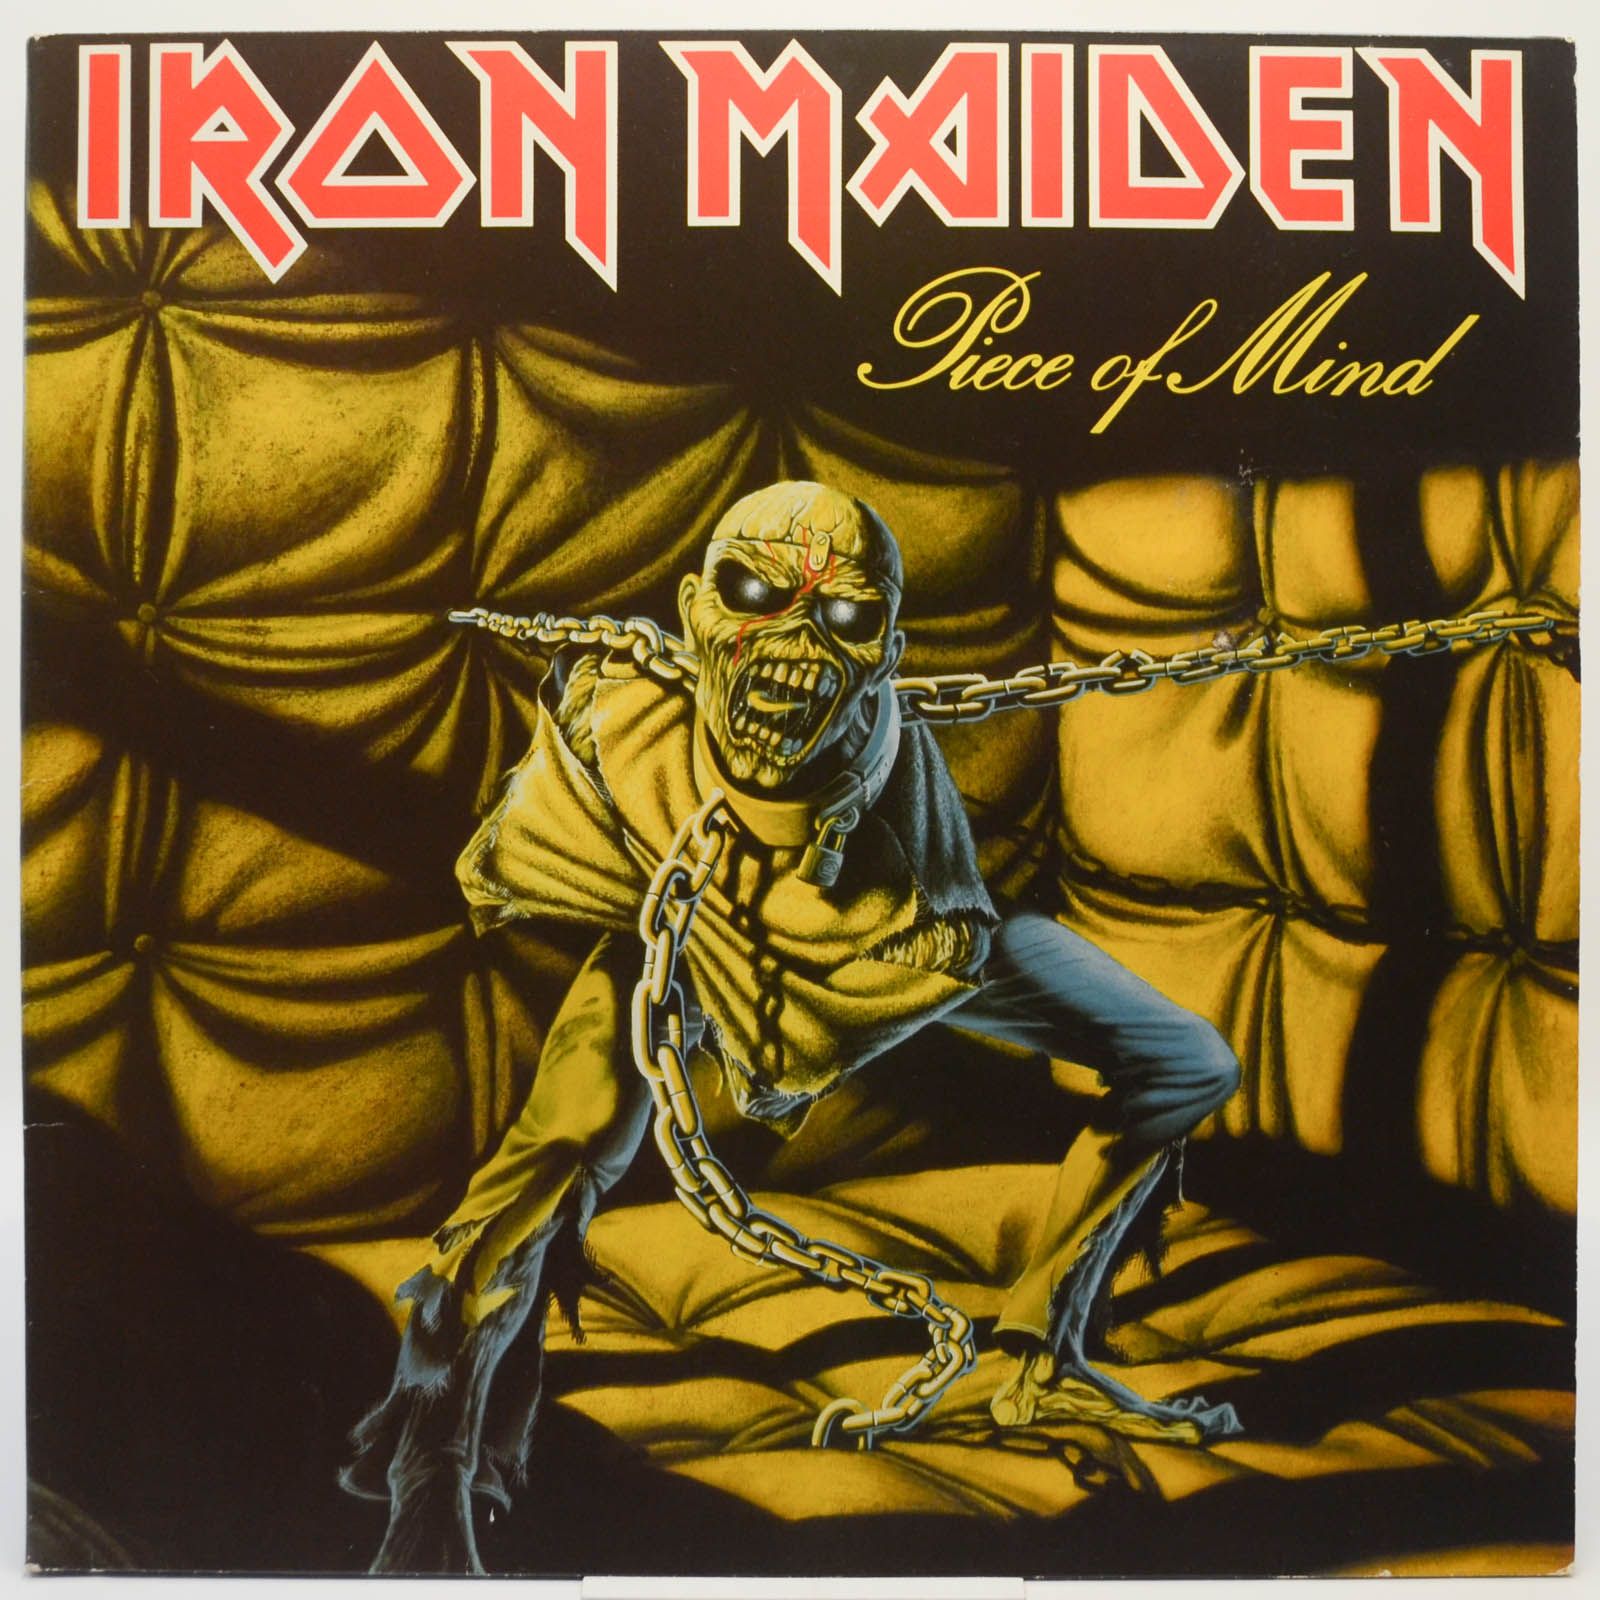 Iron Maiden — Piece Of Mind, 1983